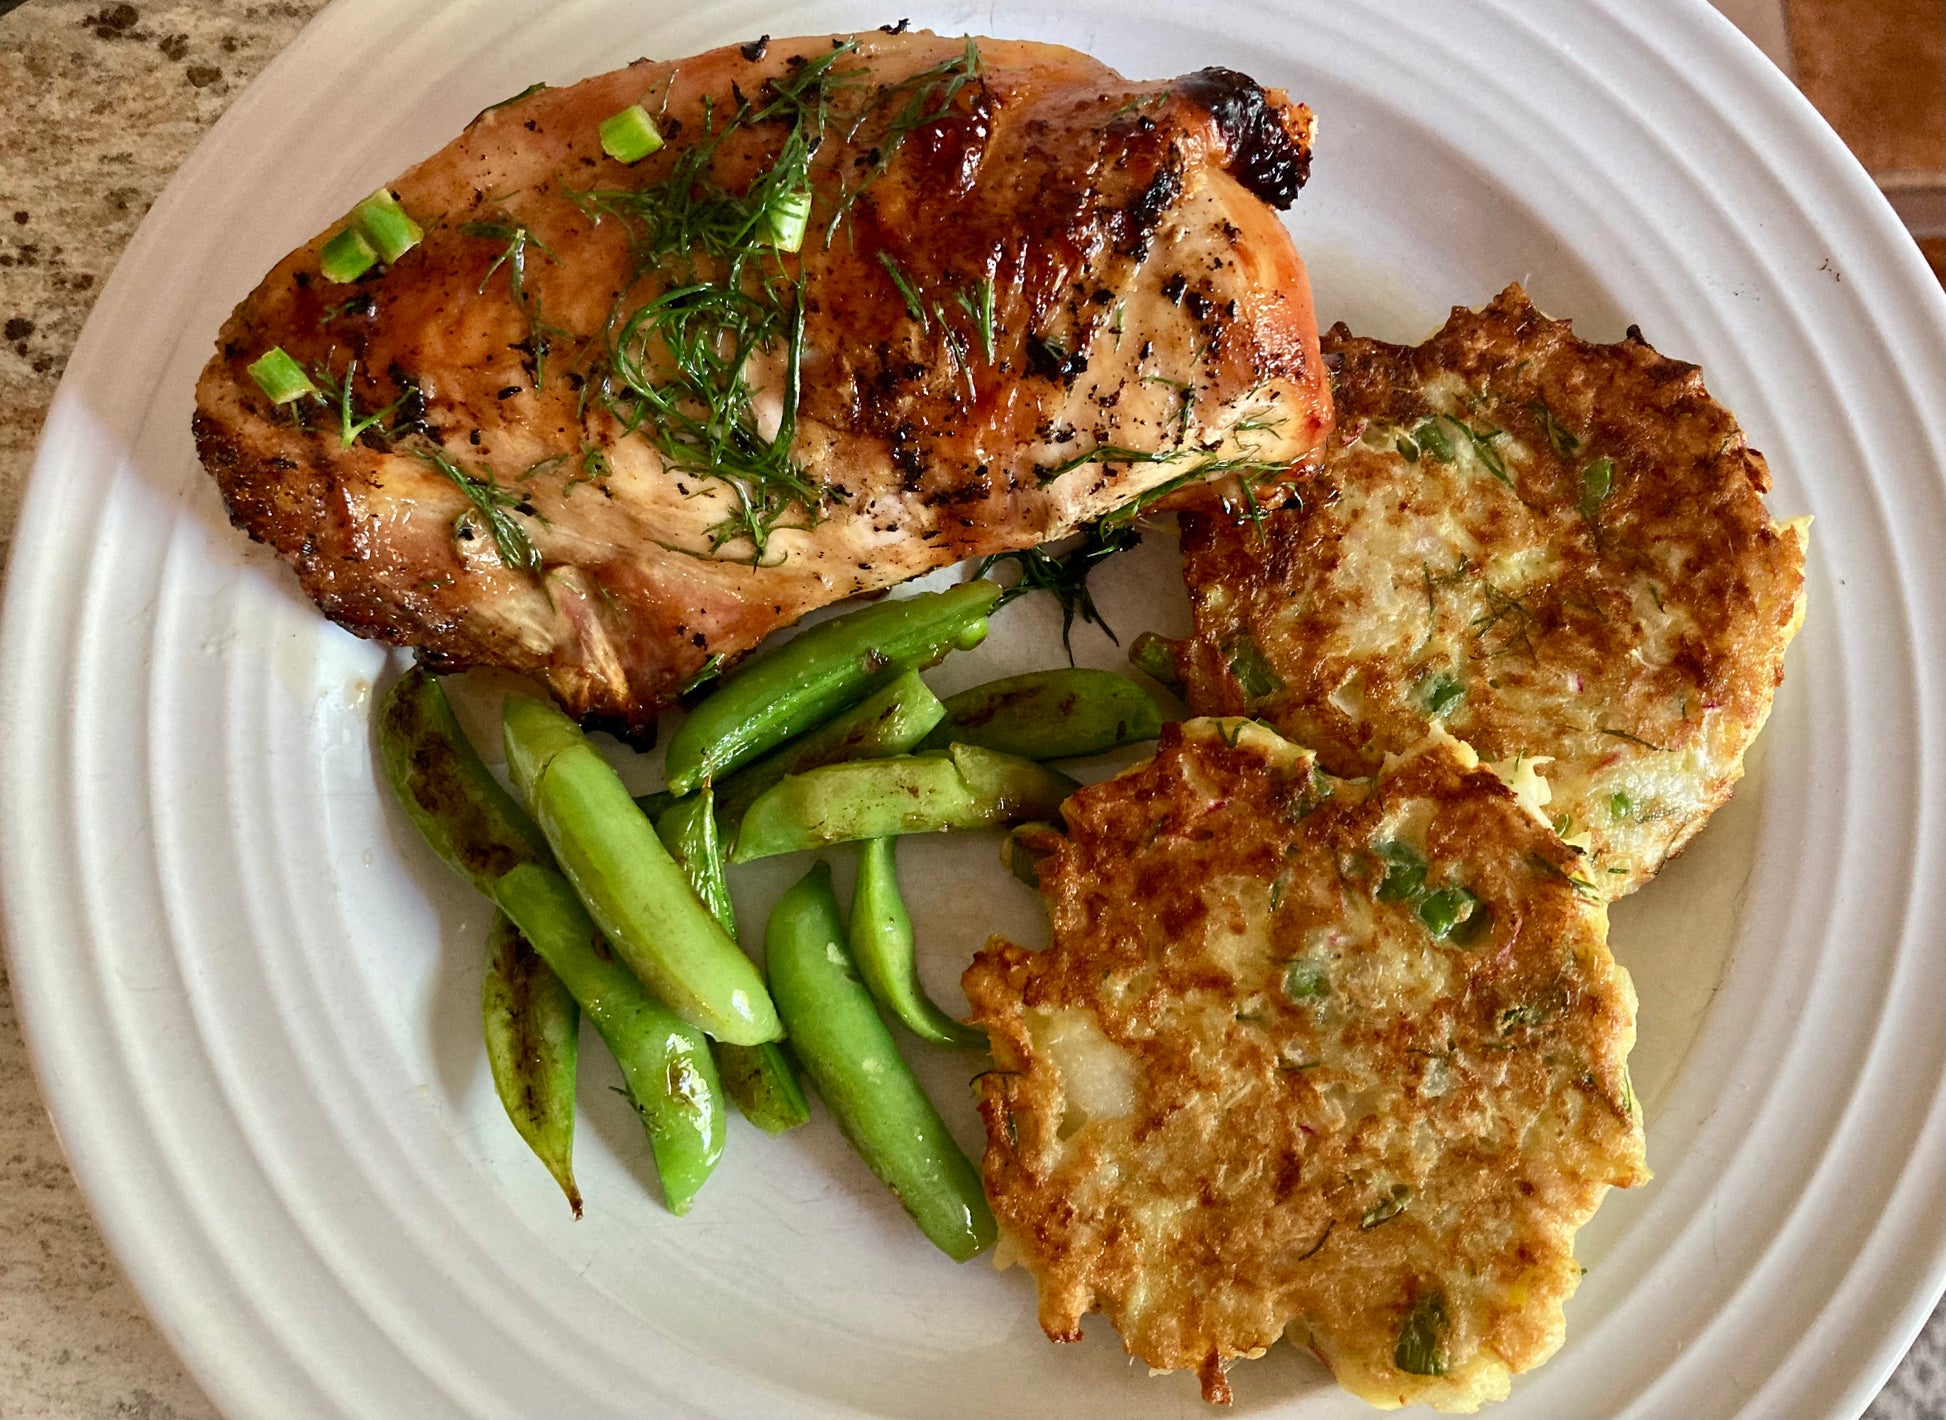 Grilled chicken breast with veggies